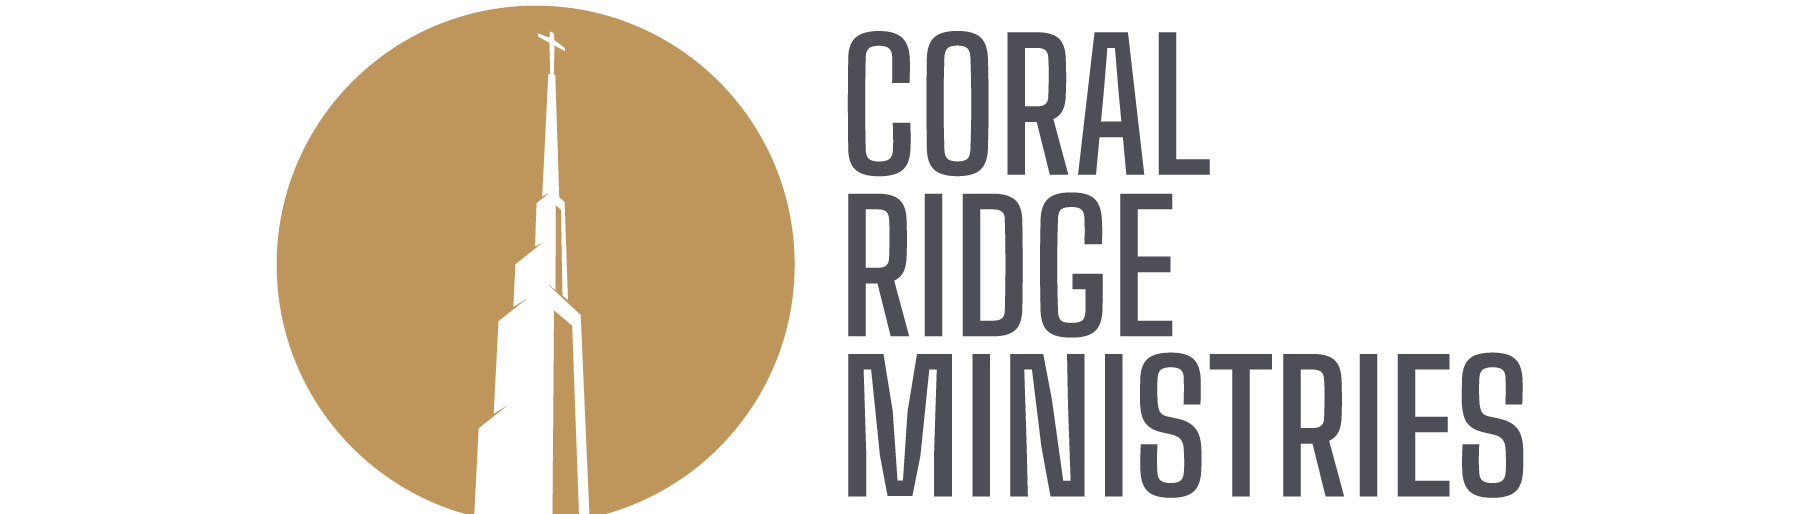 Coral Ridge Ministries Logo Black and Gold